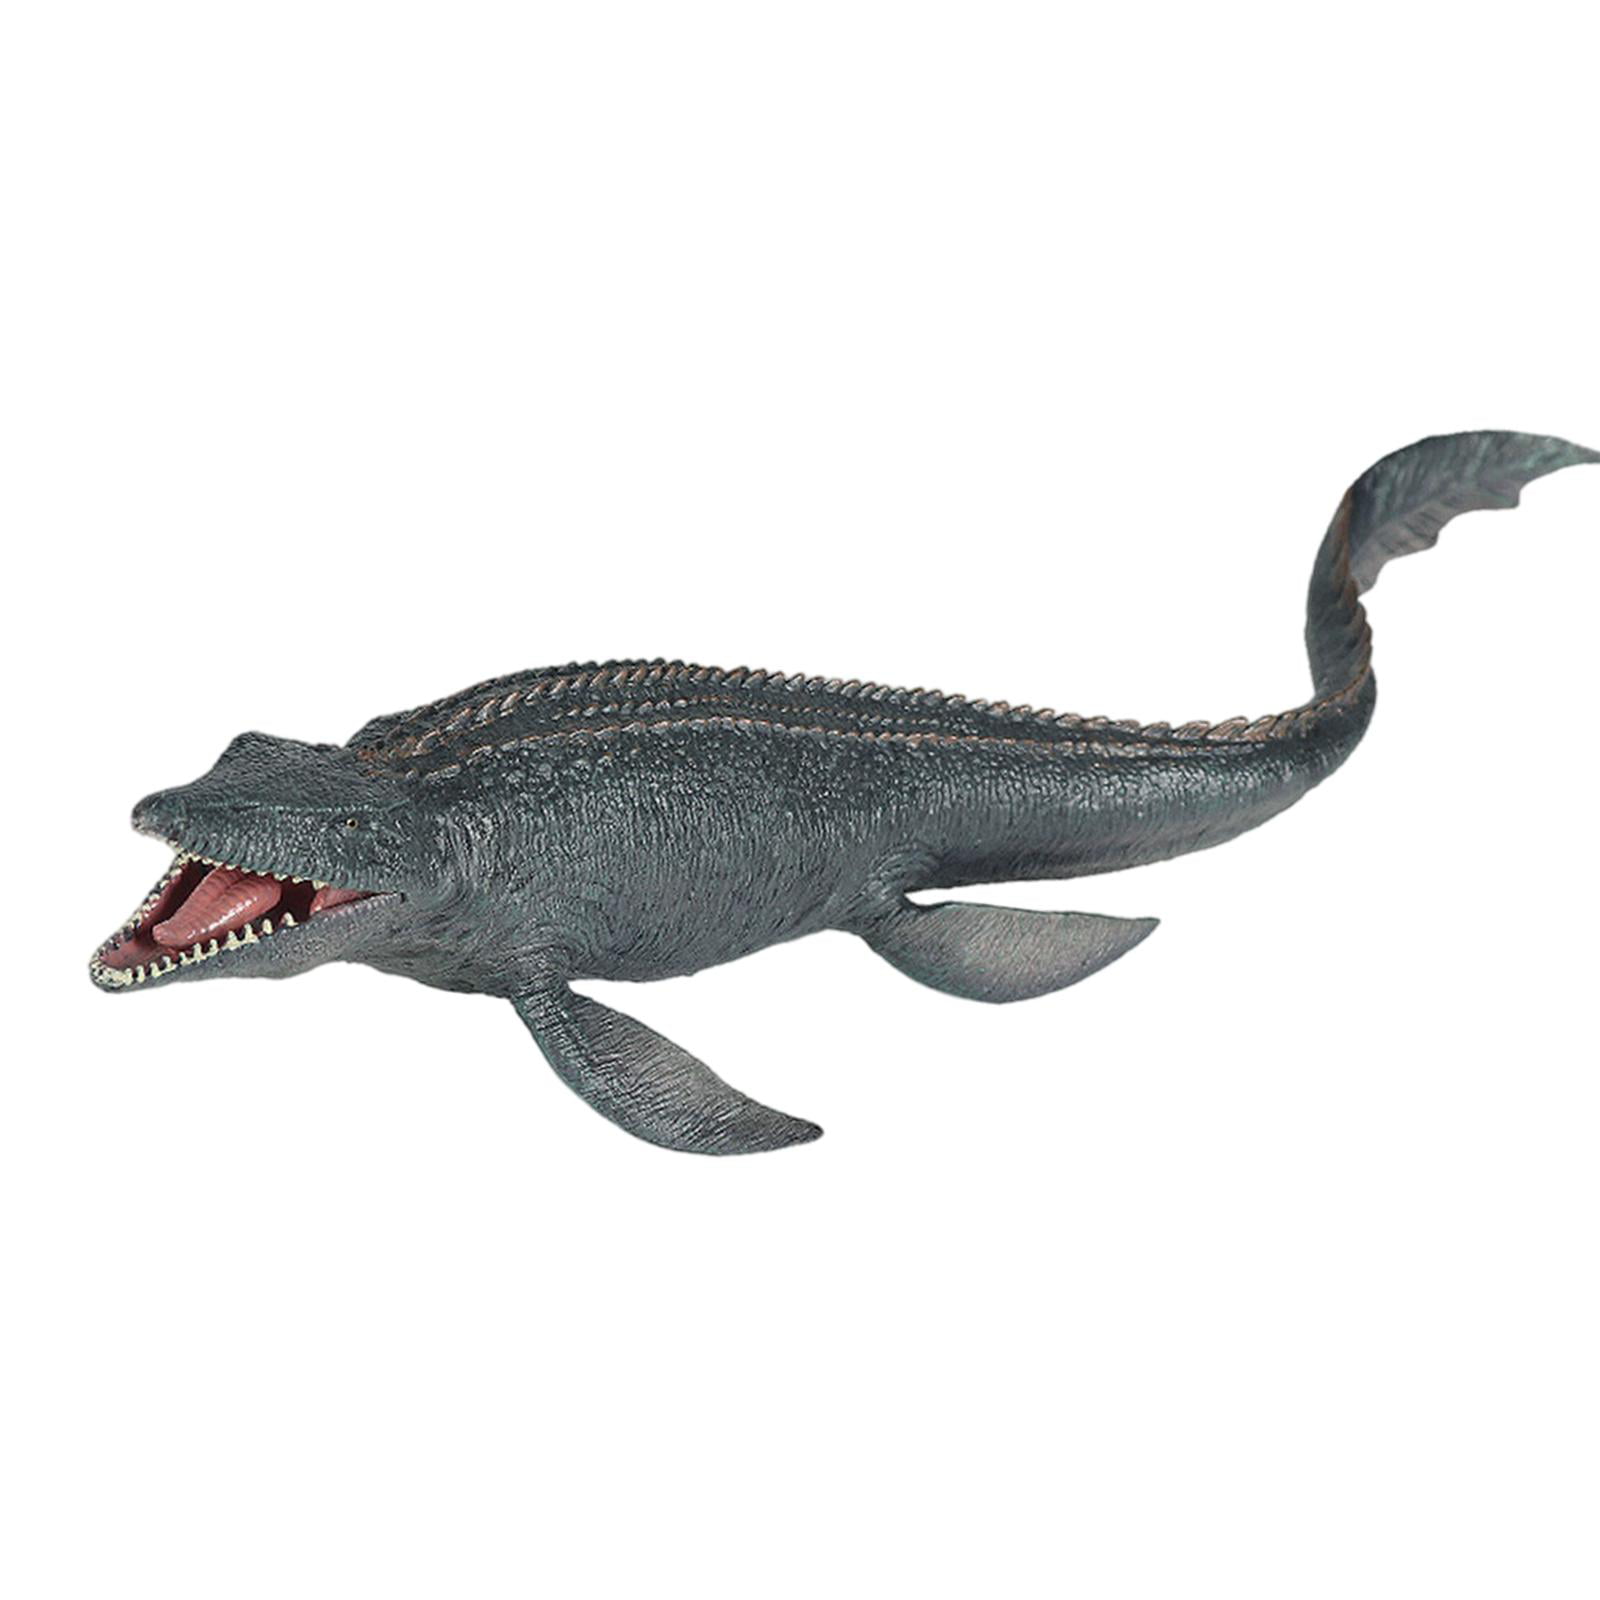 2 Mosasaurus Model Ocean Dinosaur Sea Life Toy Action Figure Kids Christmas Gift 